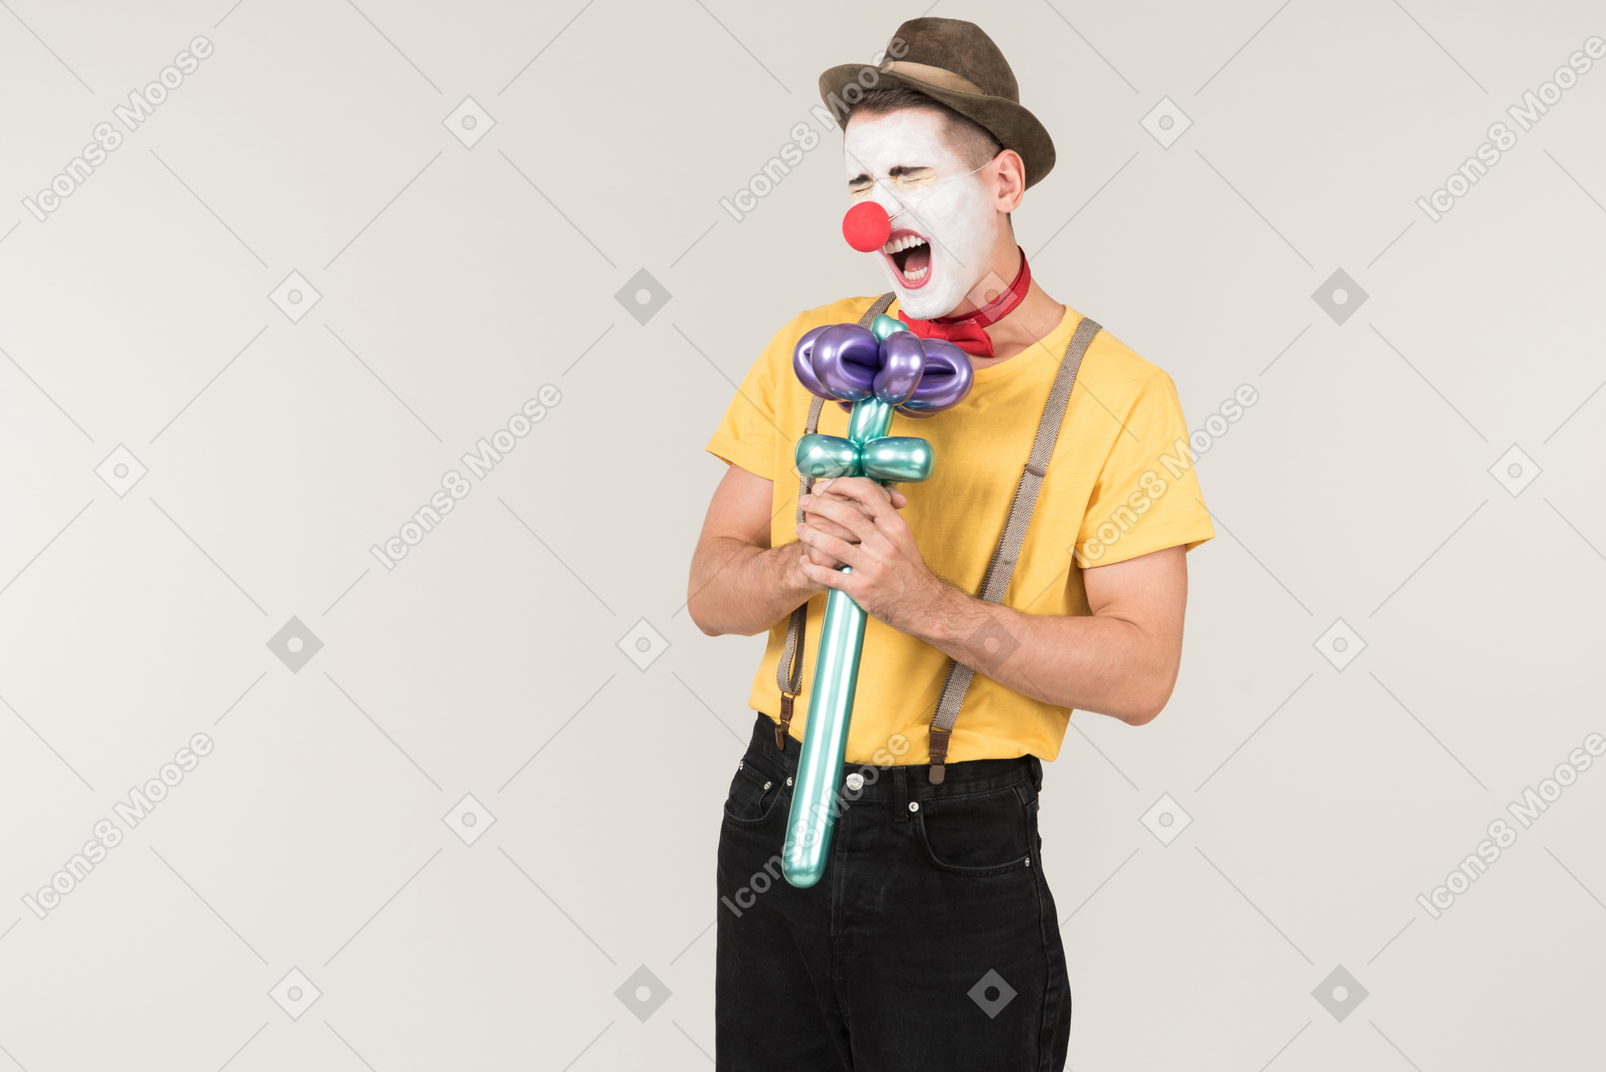 Male clown singing using balloon flower like a microphone